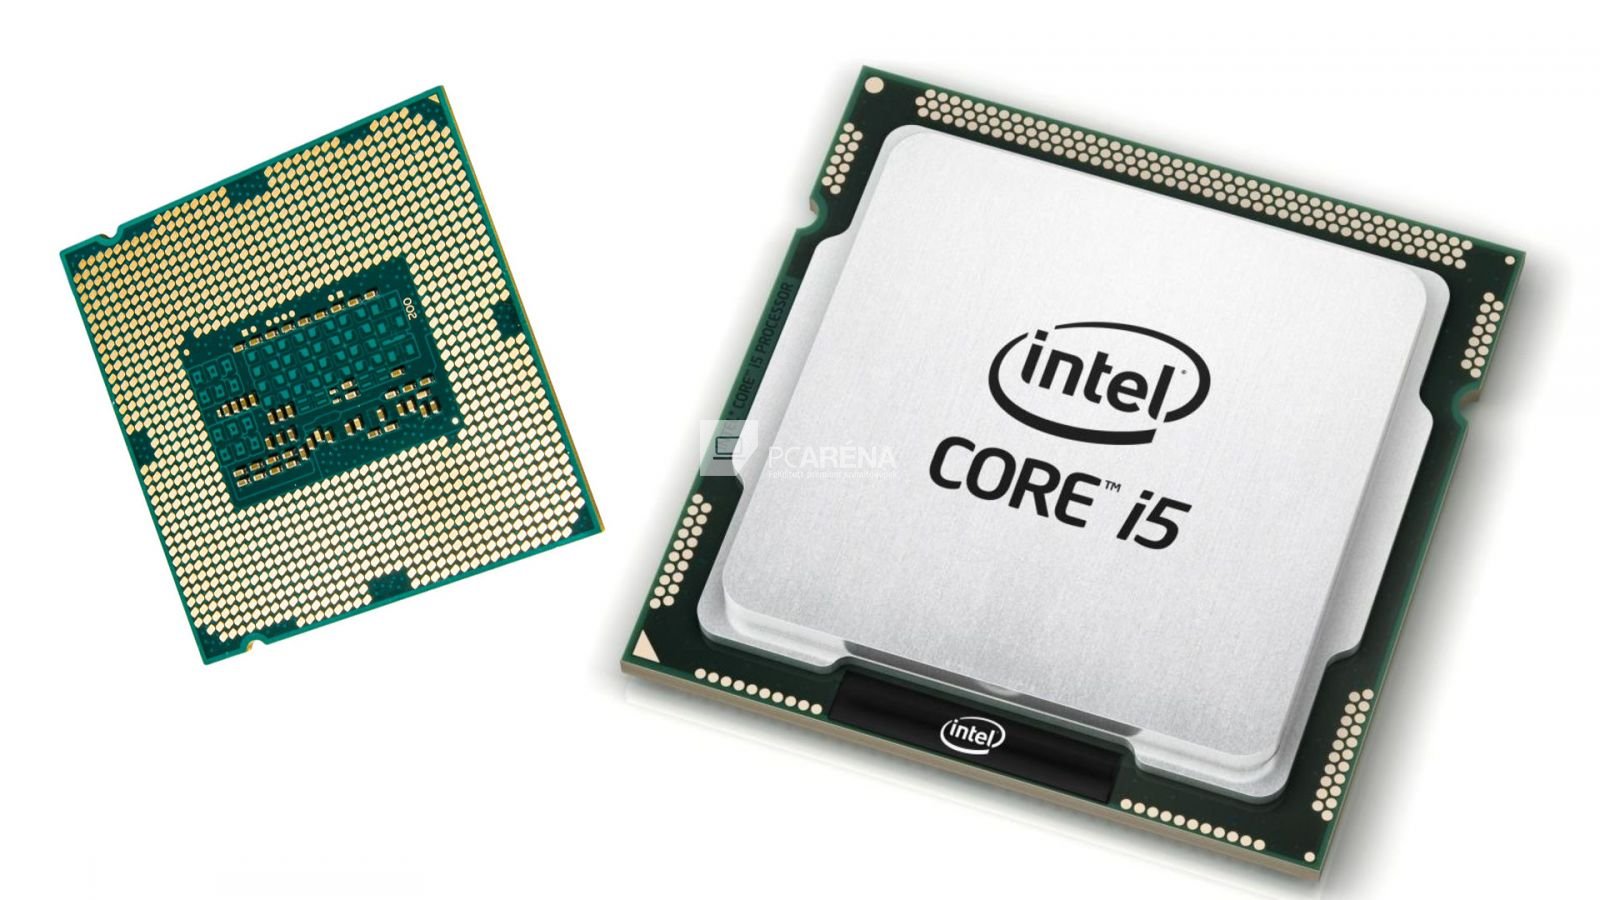 Интел сор. Процессор Intel Core i5 2400. Процессор Intel Core i5 inside. Intel Core i5 2400 сокет. Процессор Intel Core i5 5500.